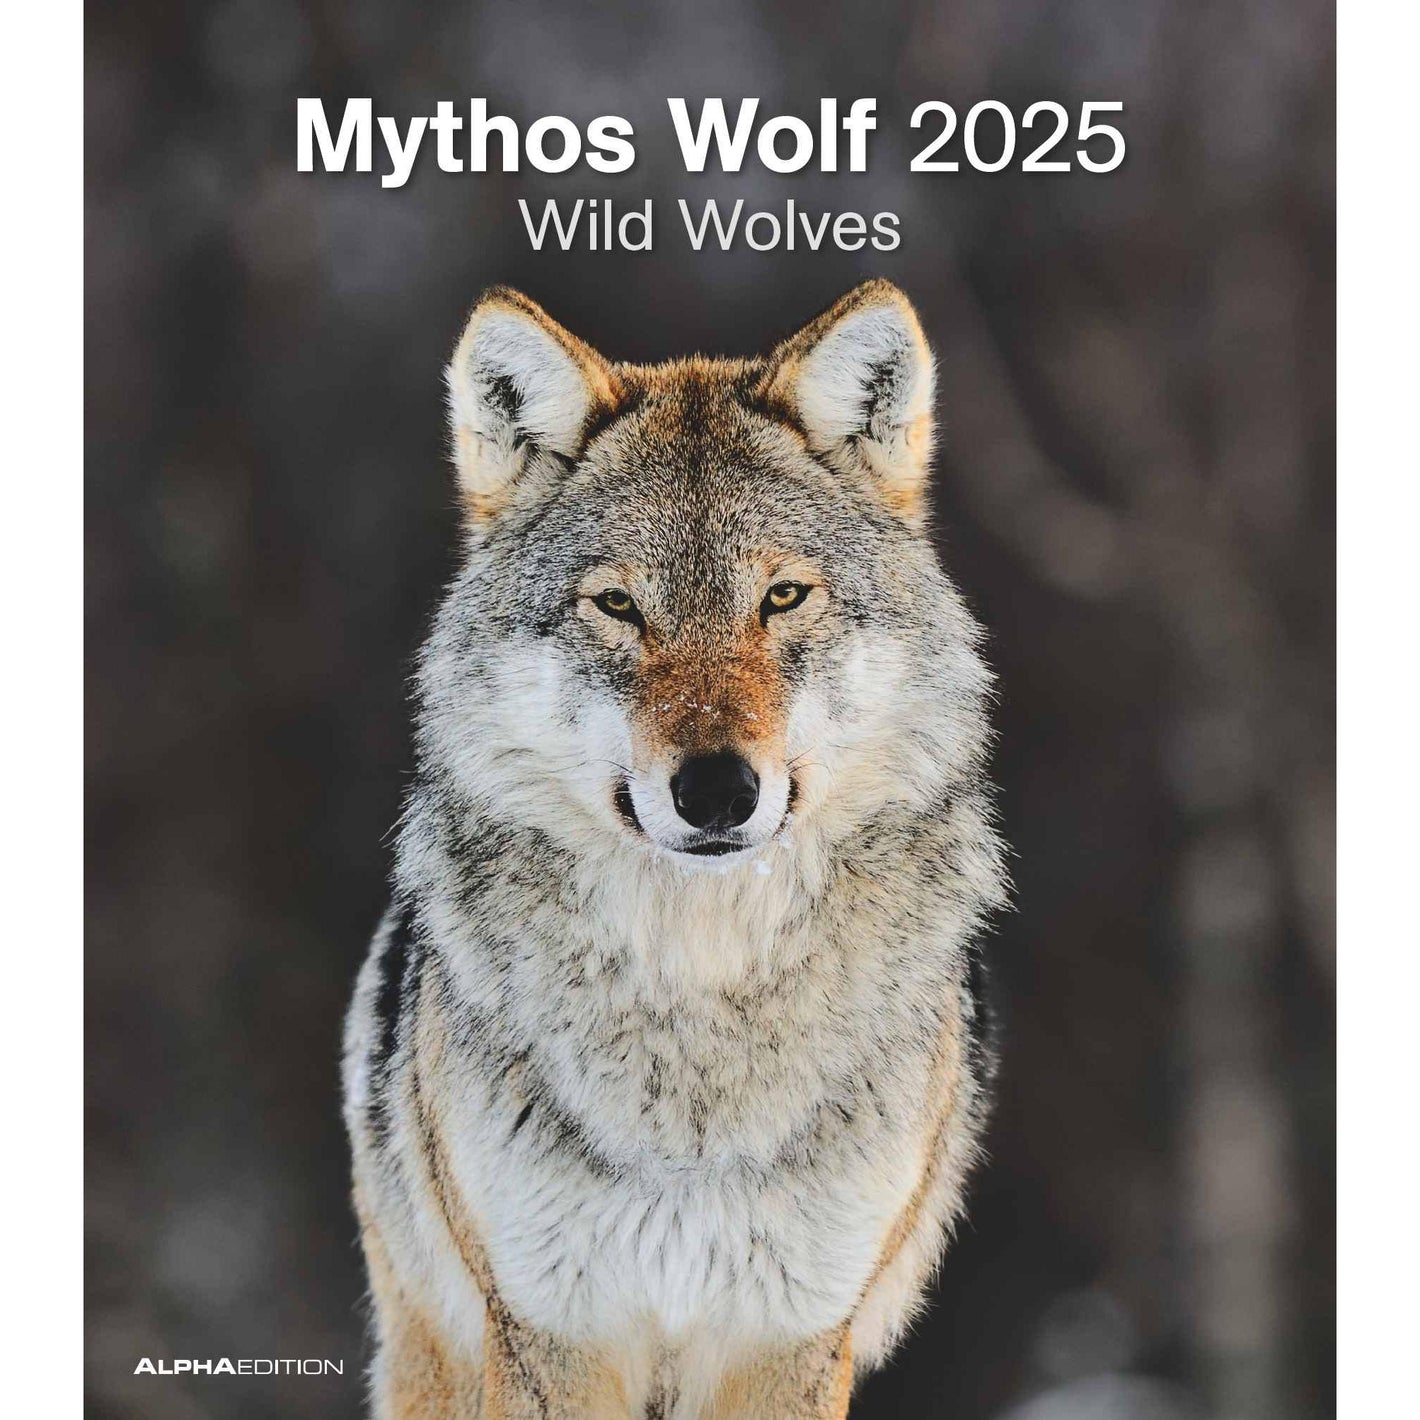 Mythos Wolf 2025